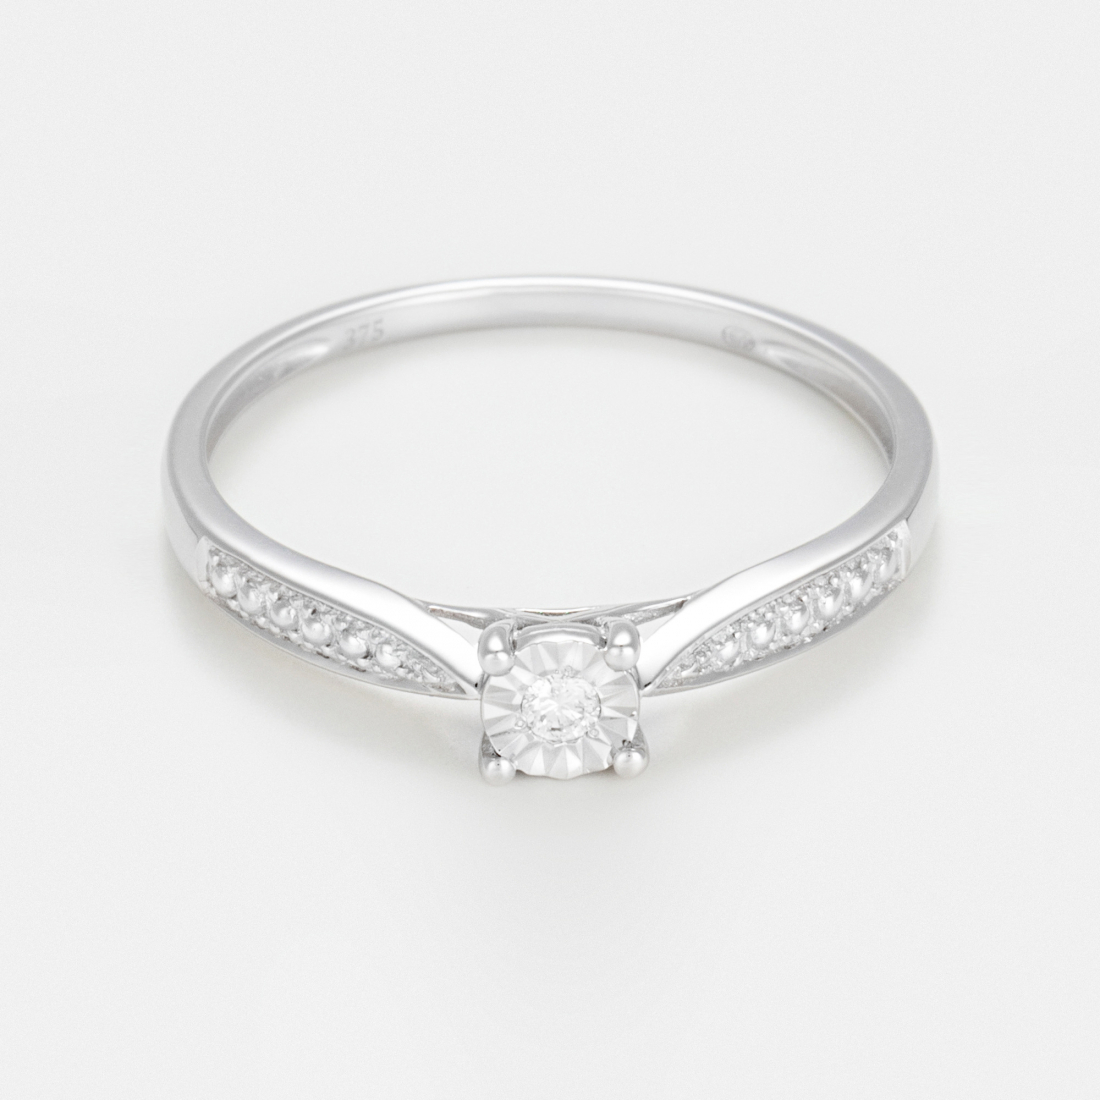 Women's 'Solitaire Merveille' Ring